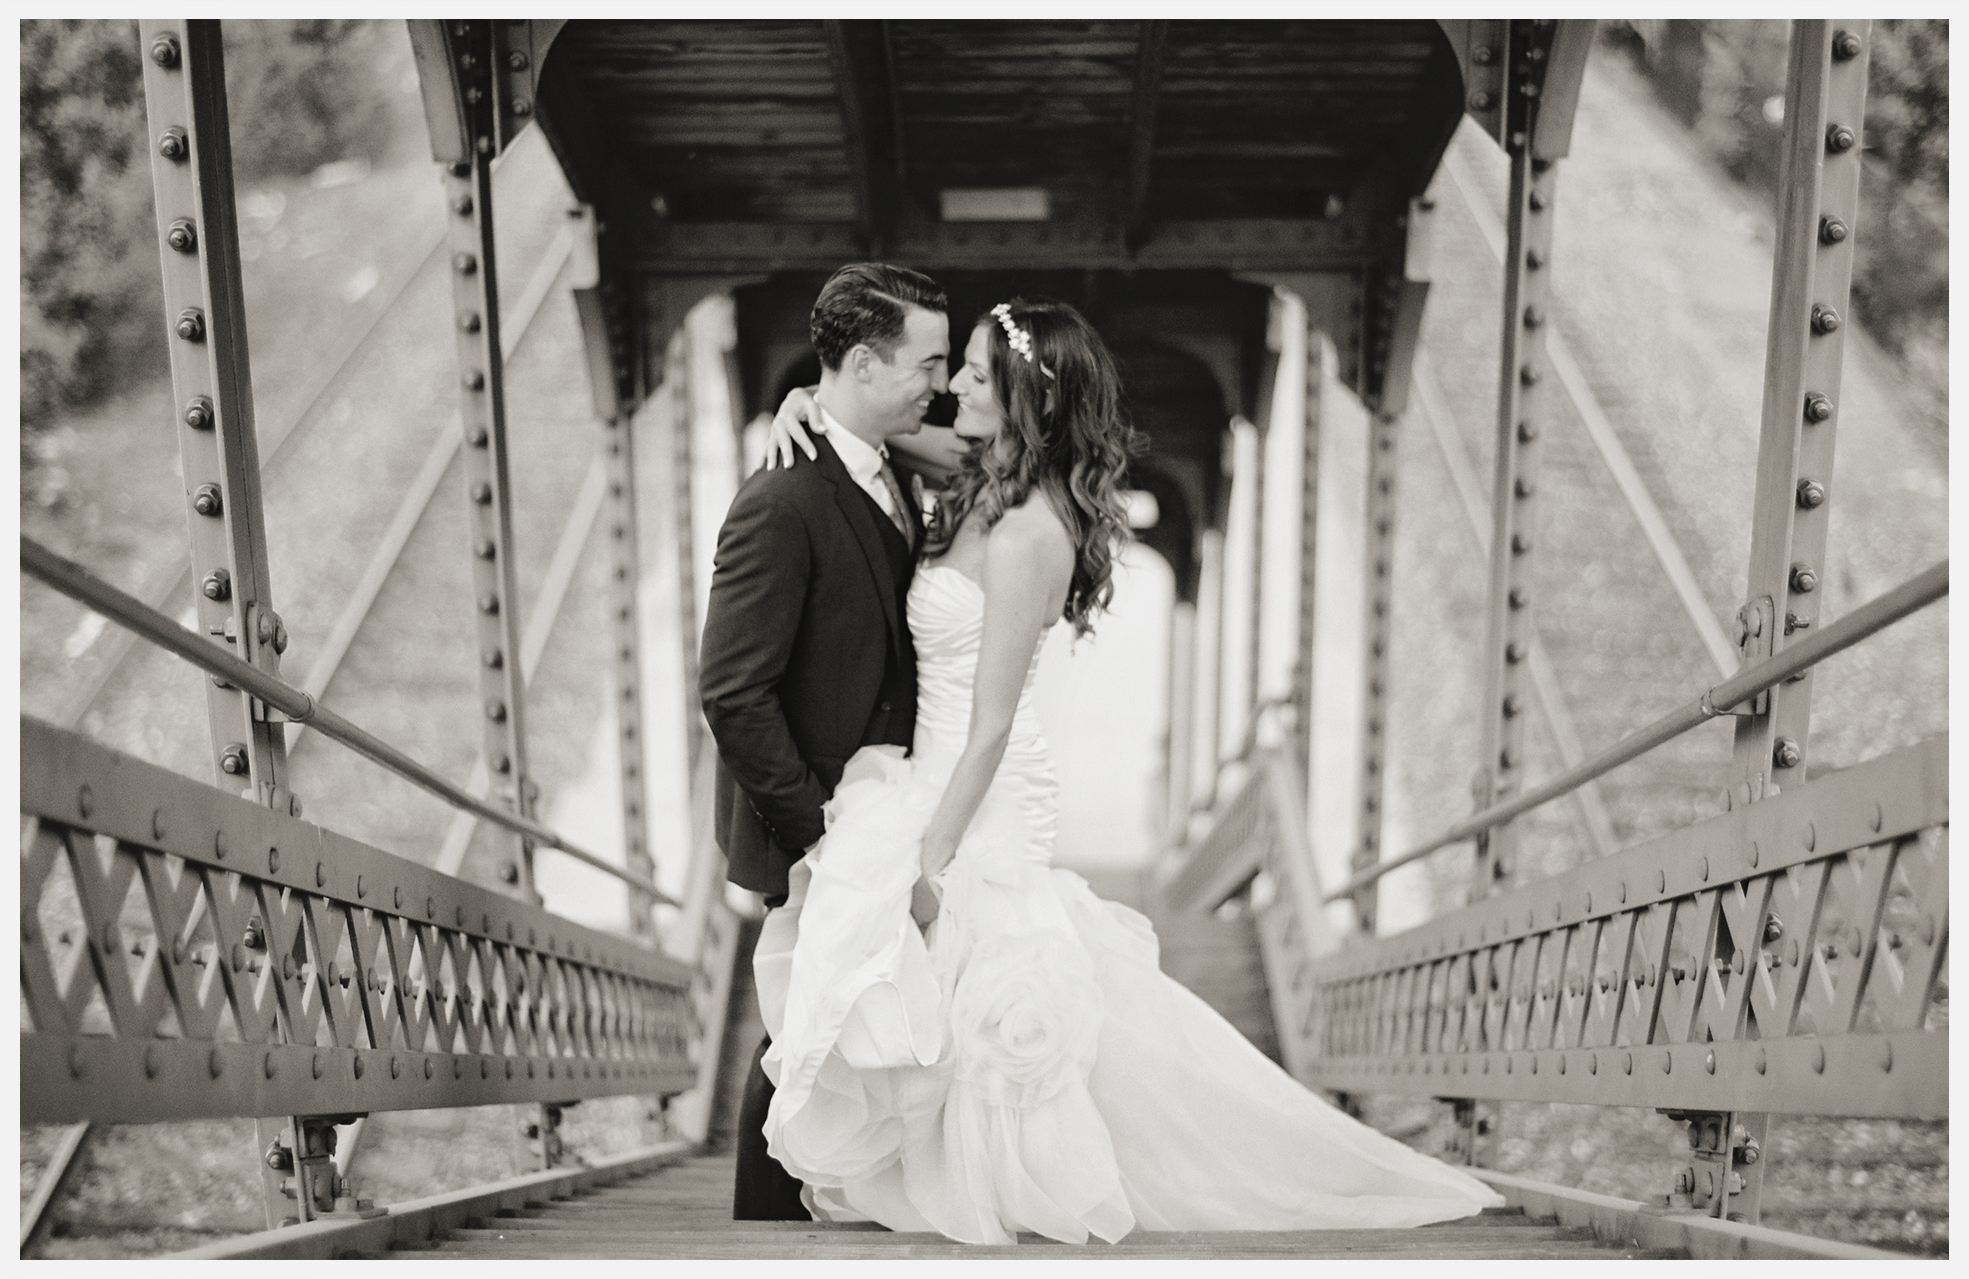 wedding photos from The Rhinecliff Hotel by New York based wedding photographer Alicia Swedenborg